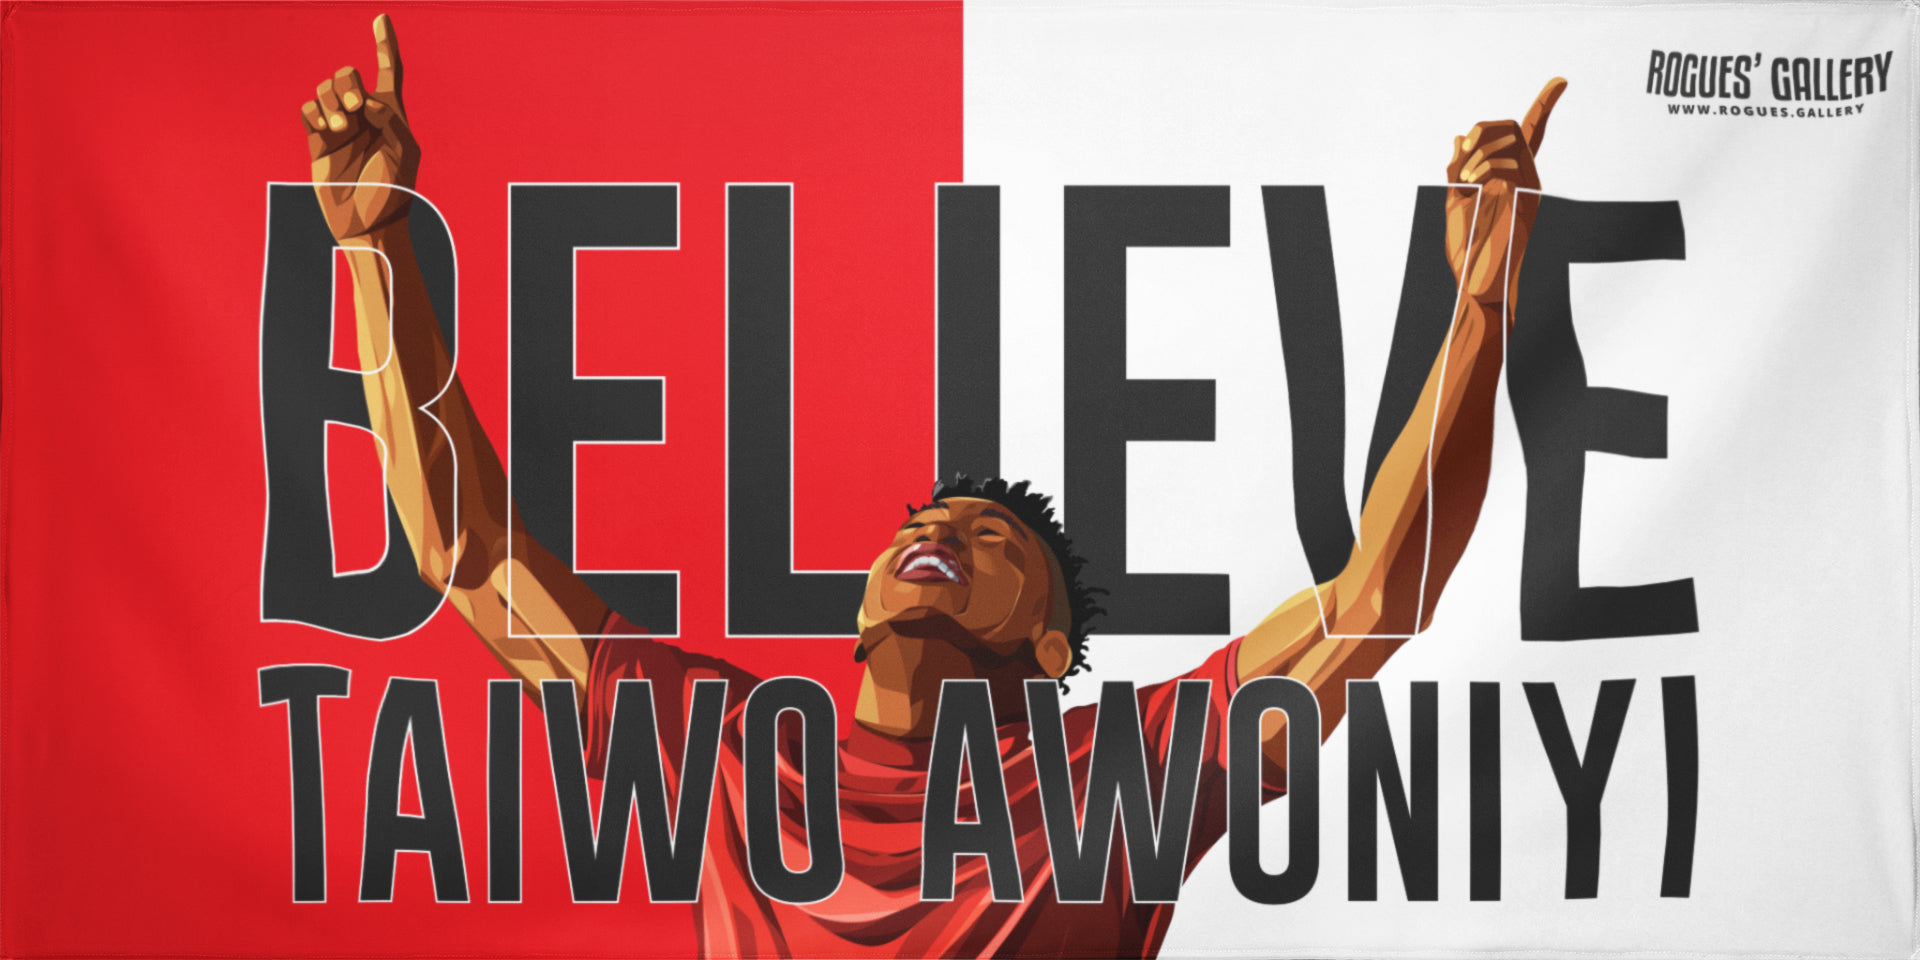 Taiwo Awoniyi Nottingham Forest striker flag